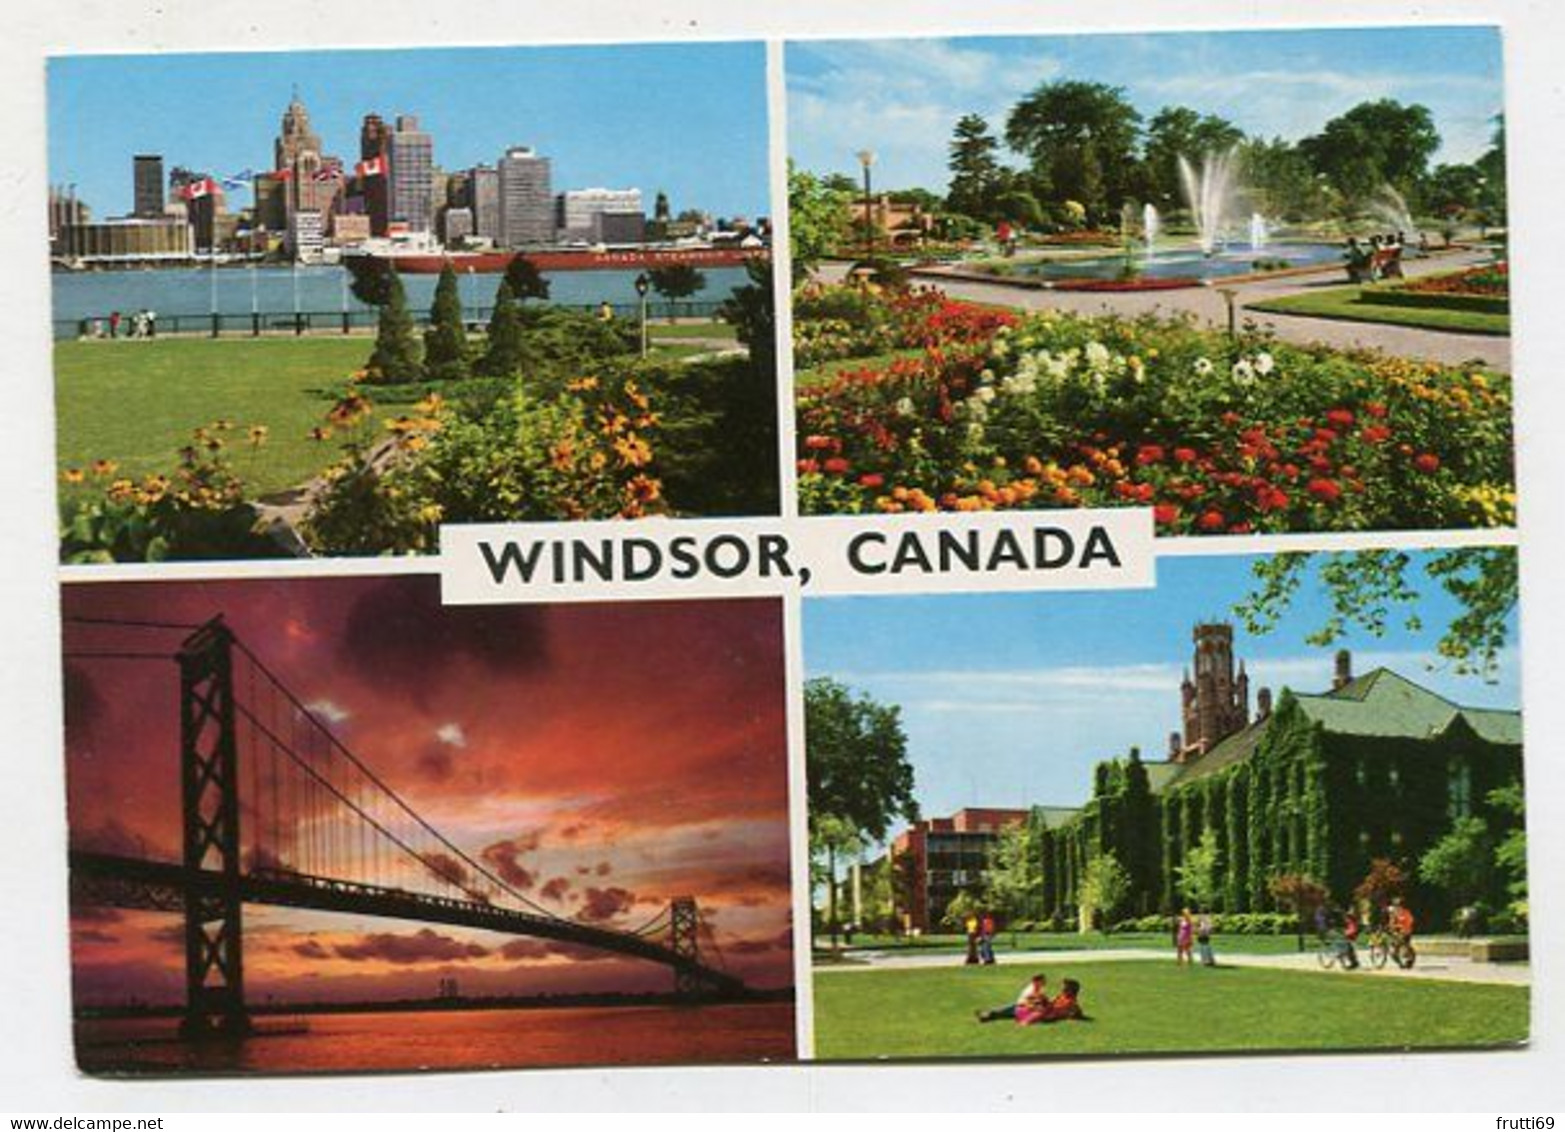 AK 113217 CANADA - Ontario - Windsor - Windsor